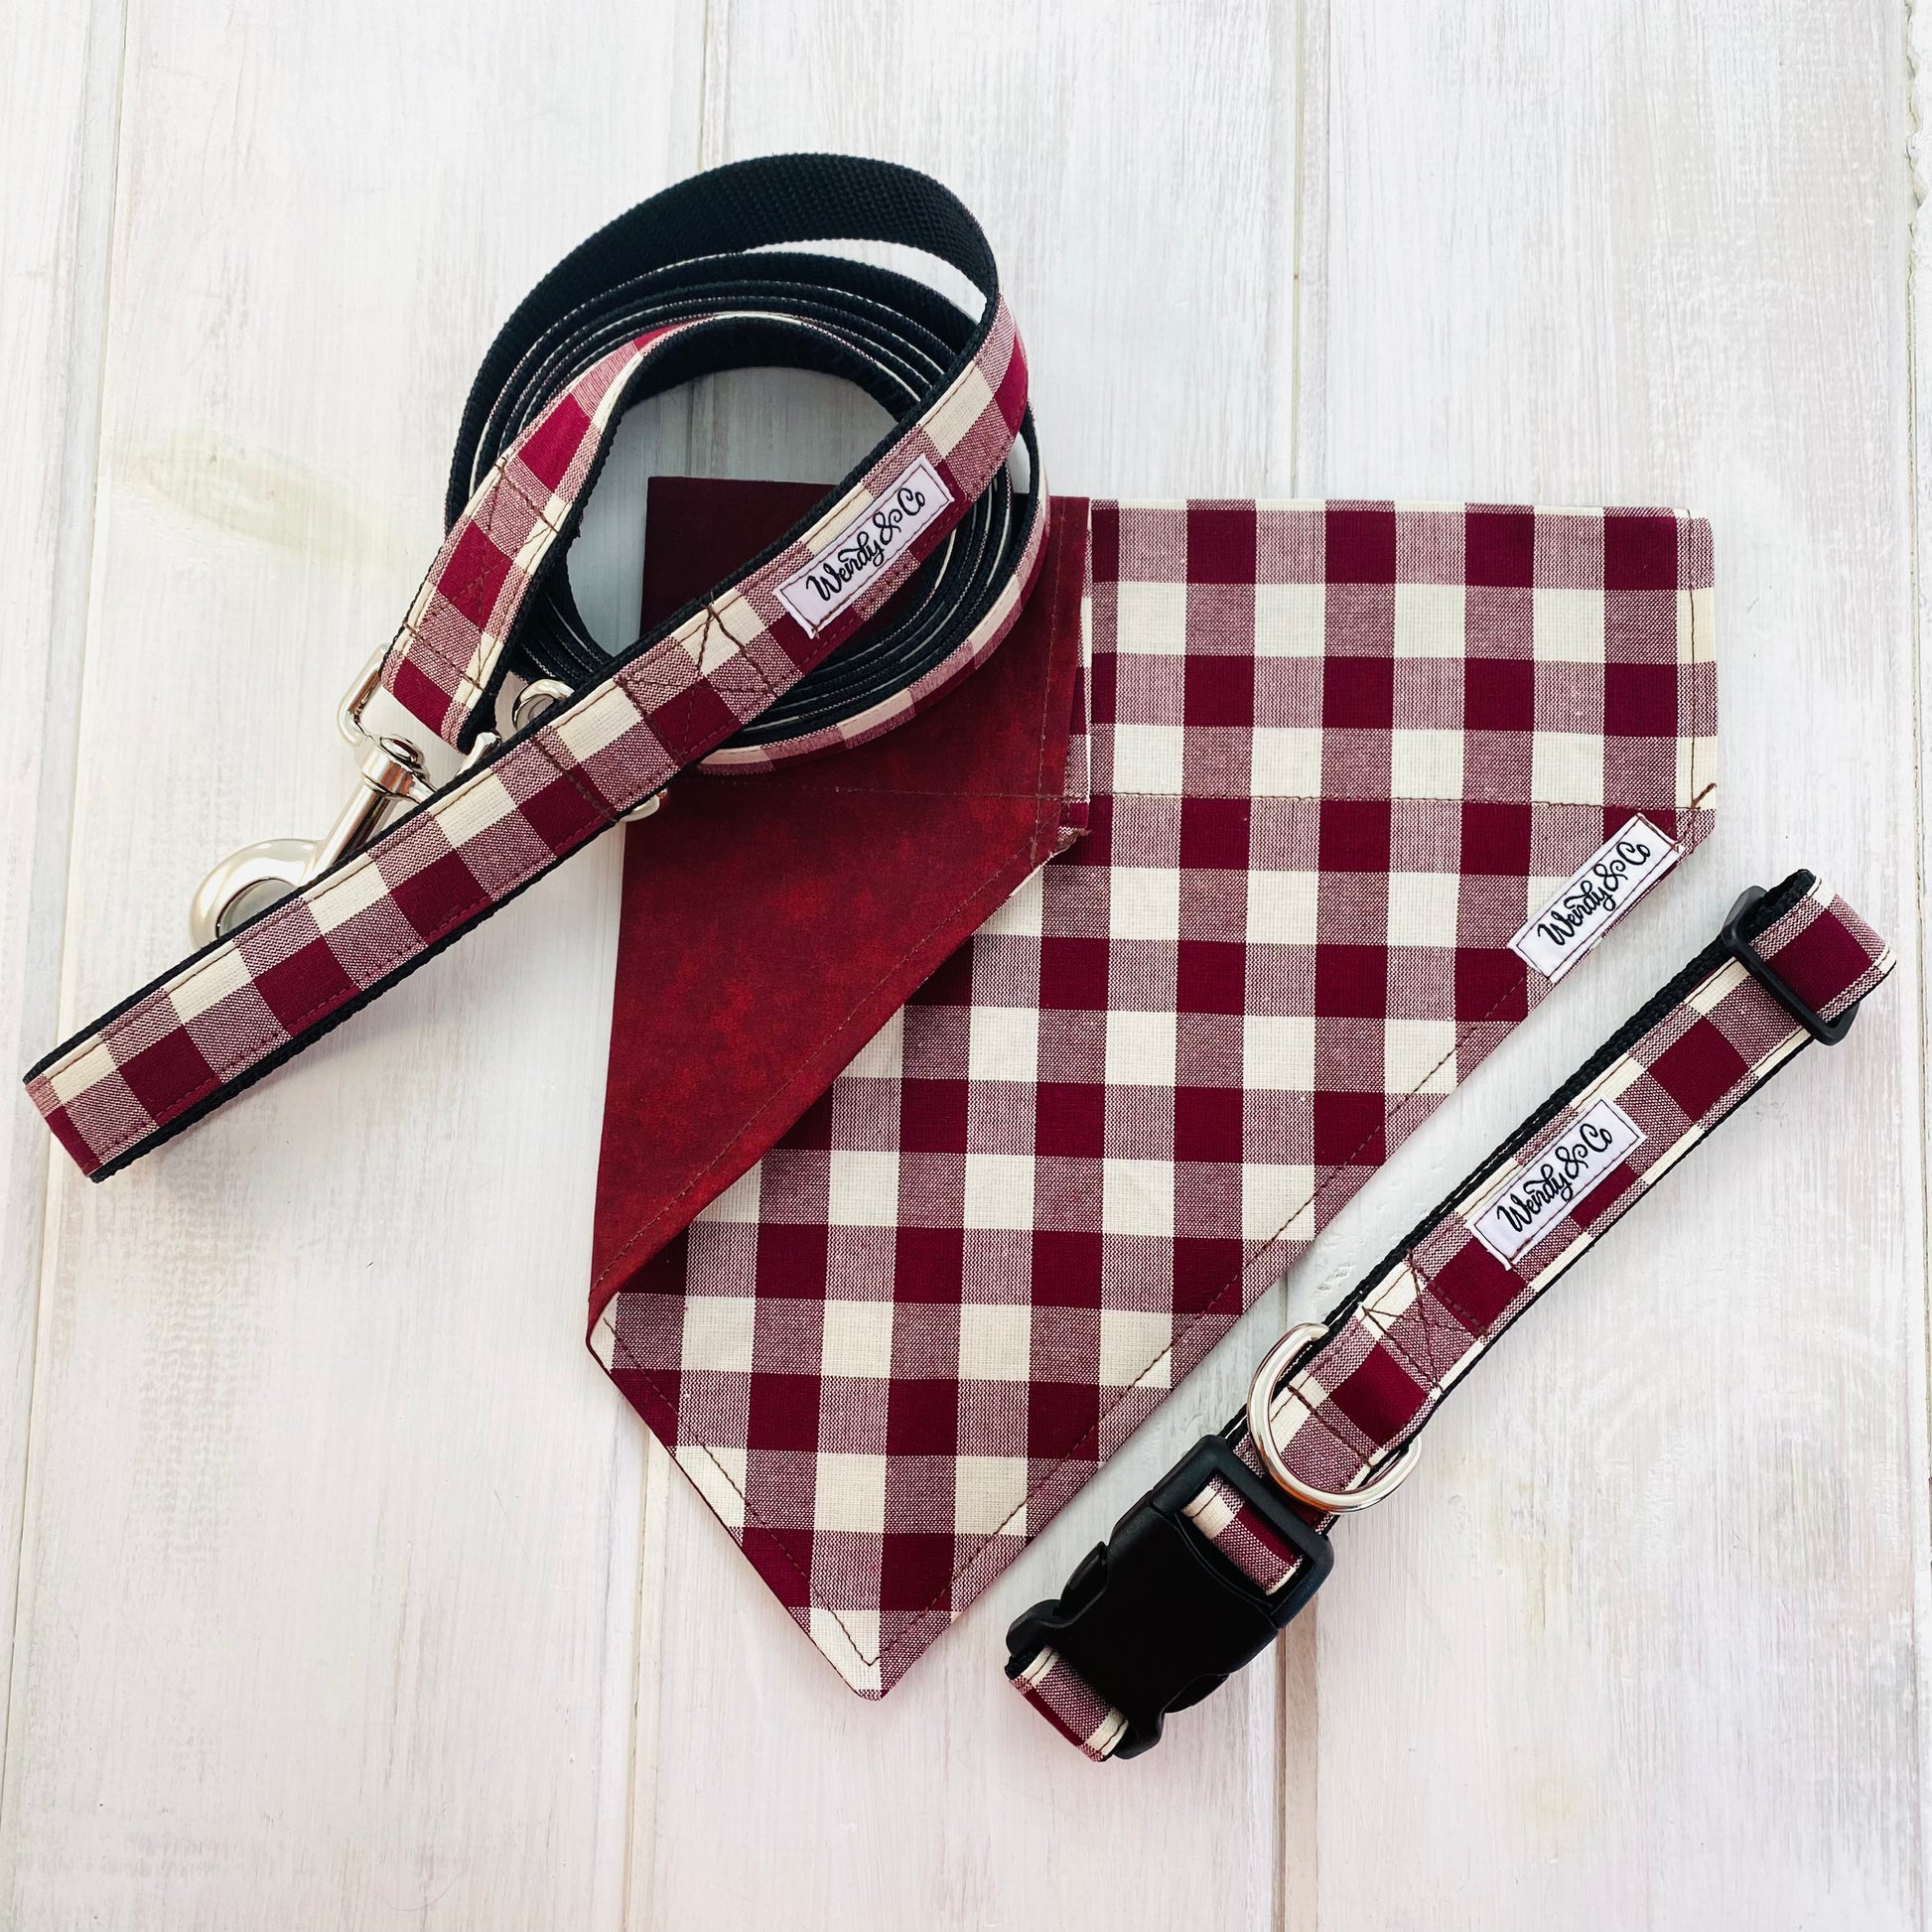 Maroon plaid check dog collar, leash and matching bandana.